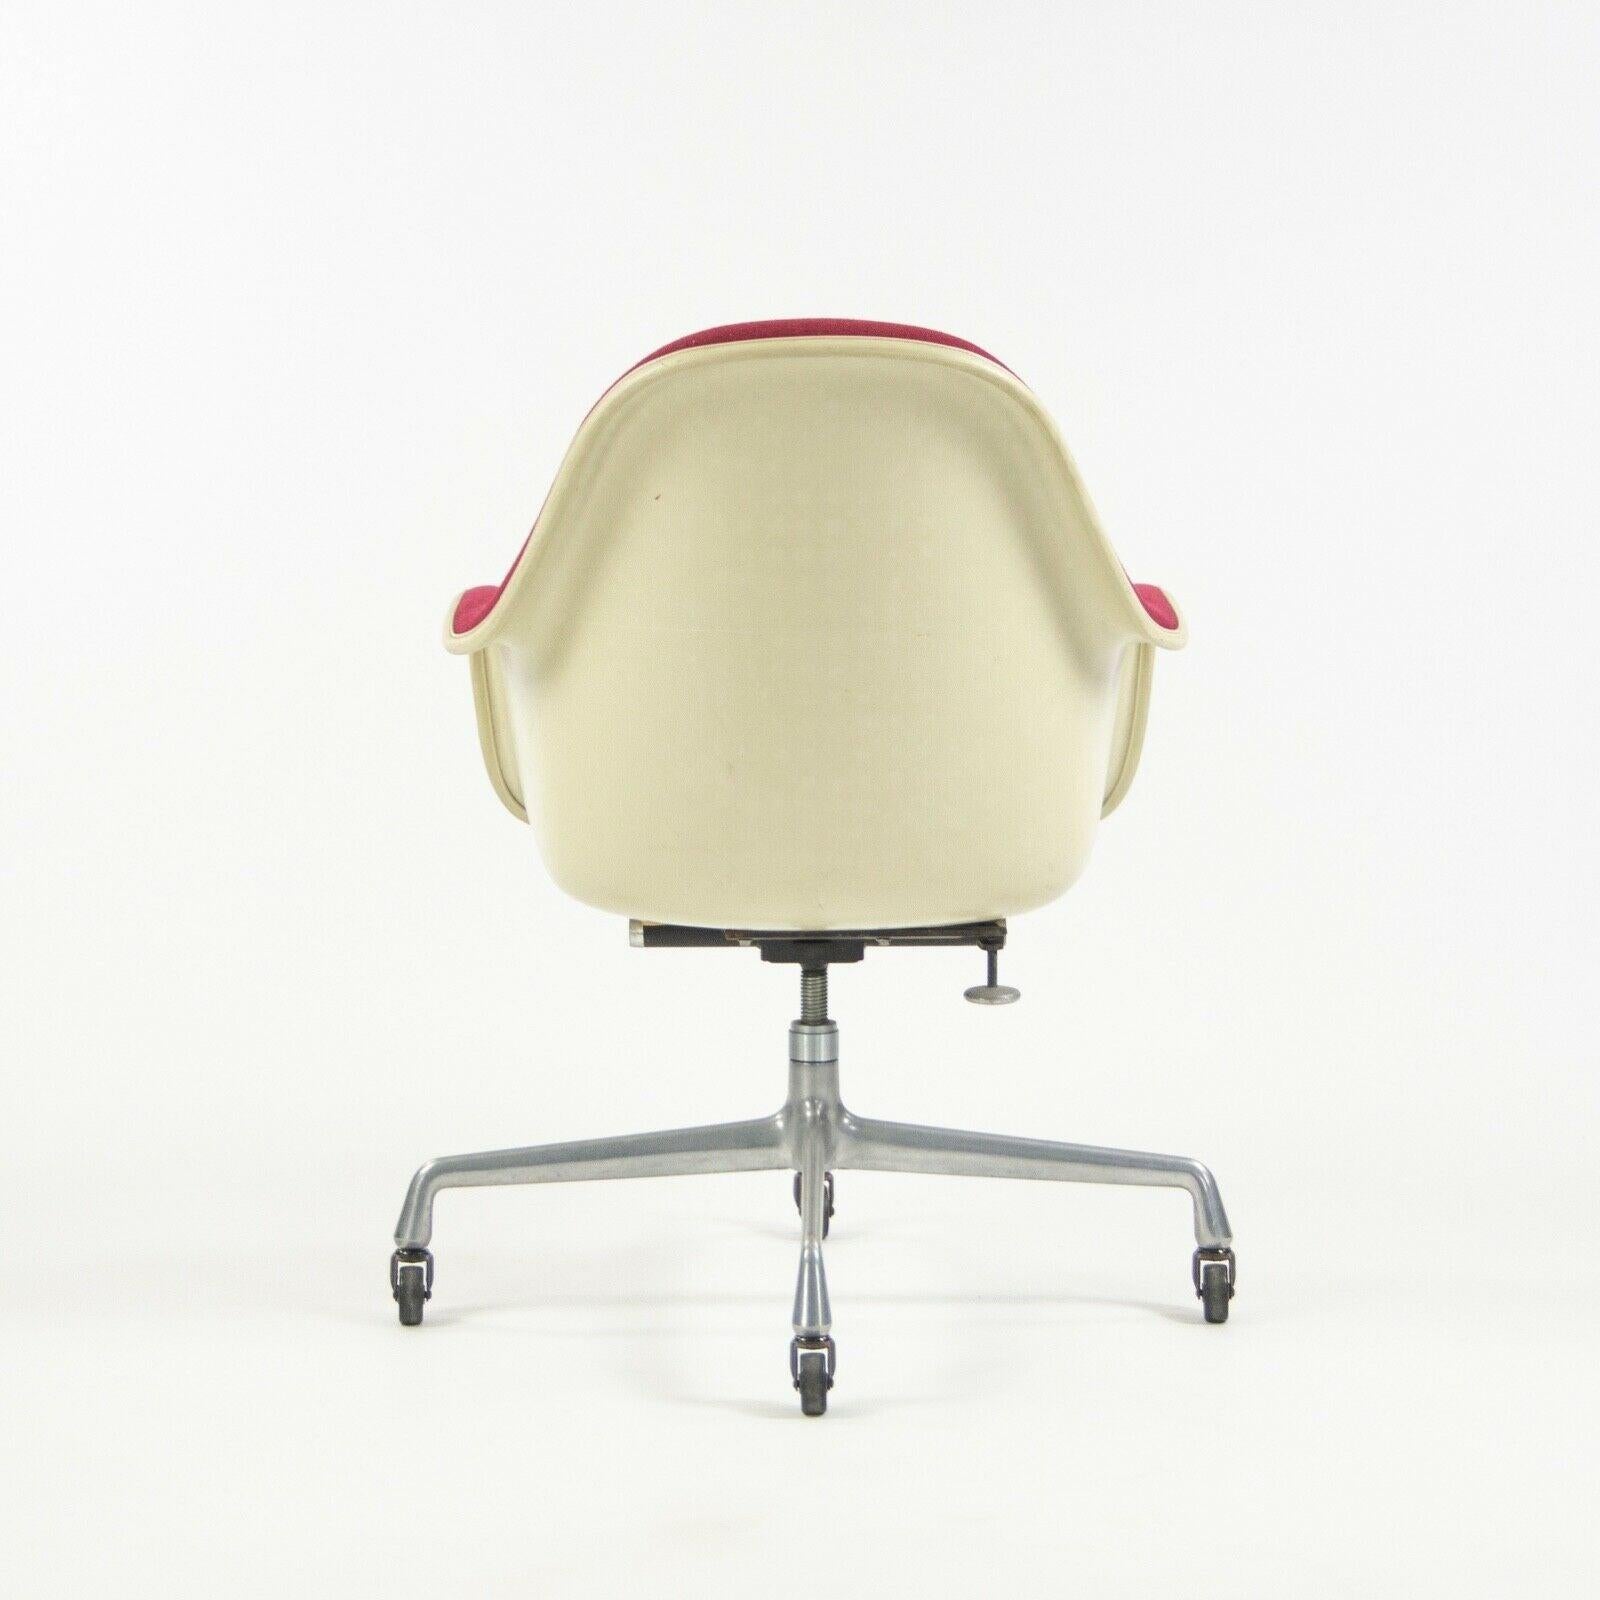 1977 Eames Herman Miller EC175 Upholstered Fiberglass Shell Chair In Good Condition For Sale In Philadelphia, PA